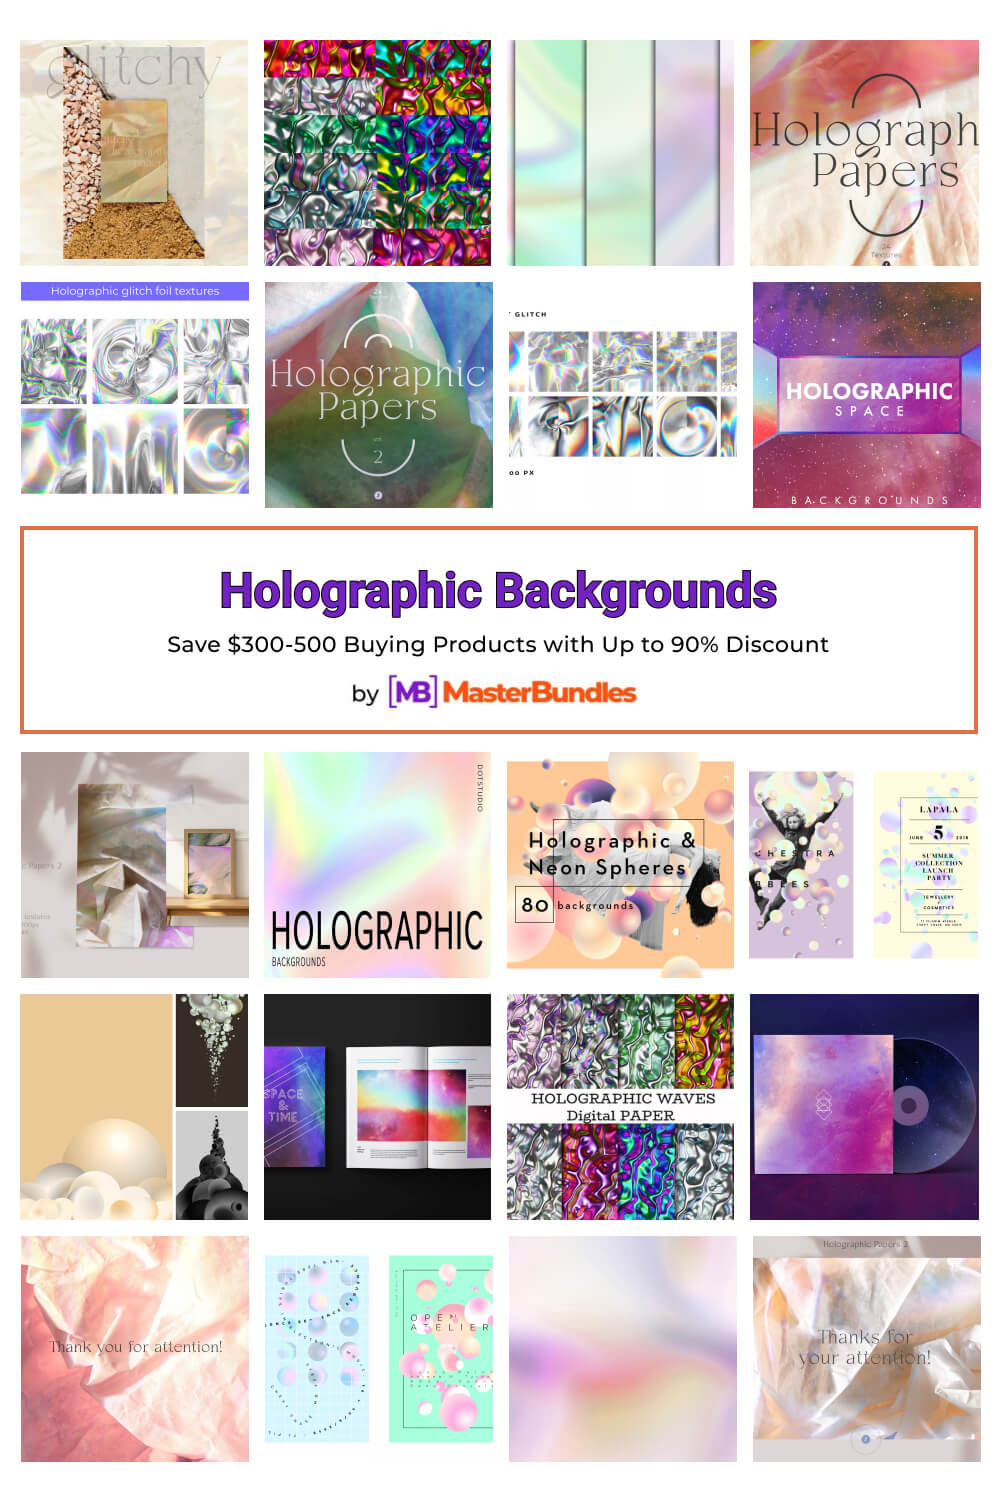 holographic backgrounds pinterest image.